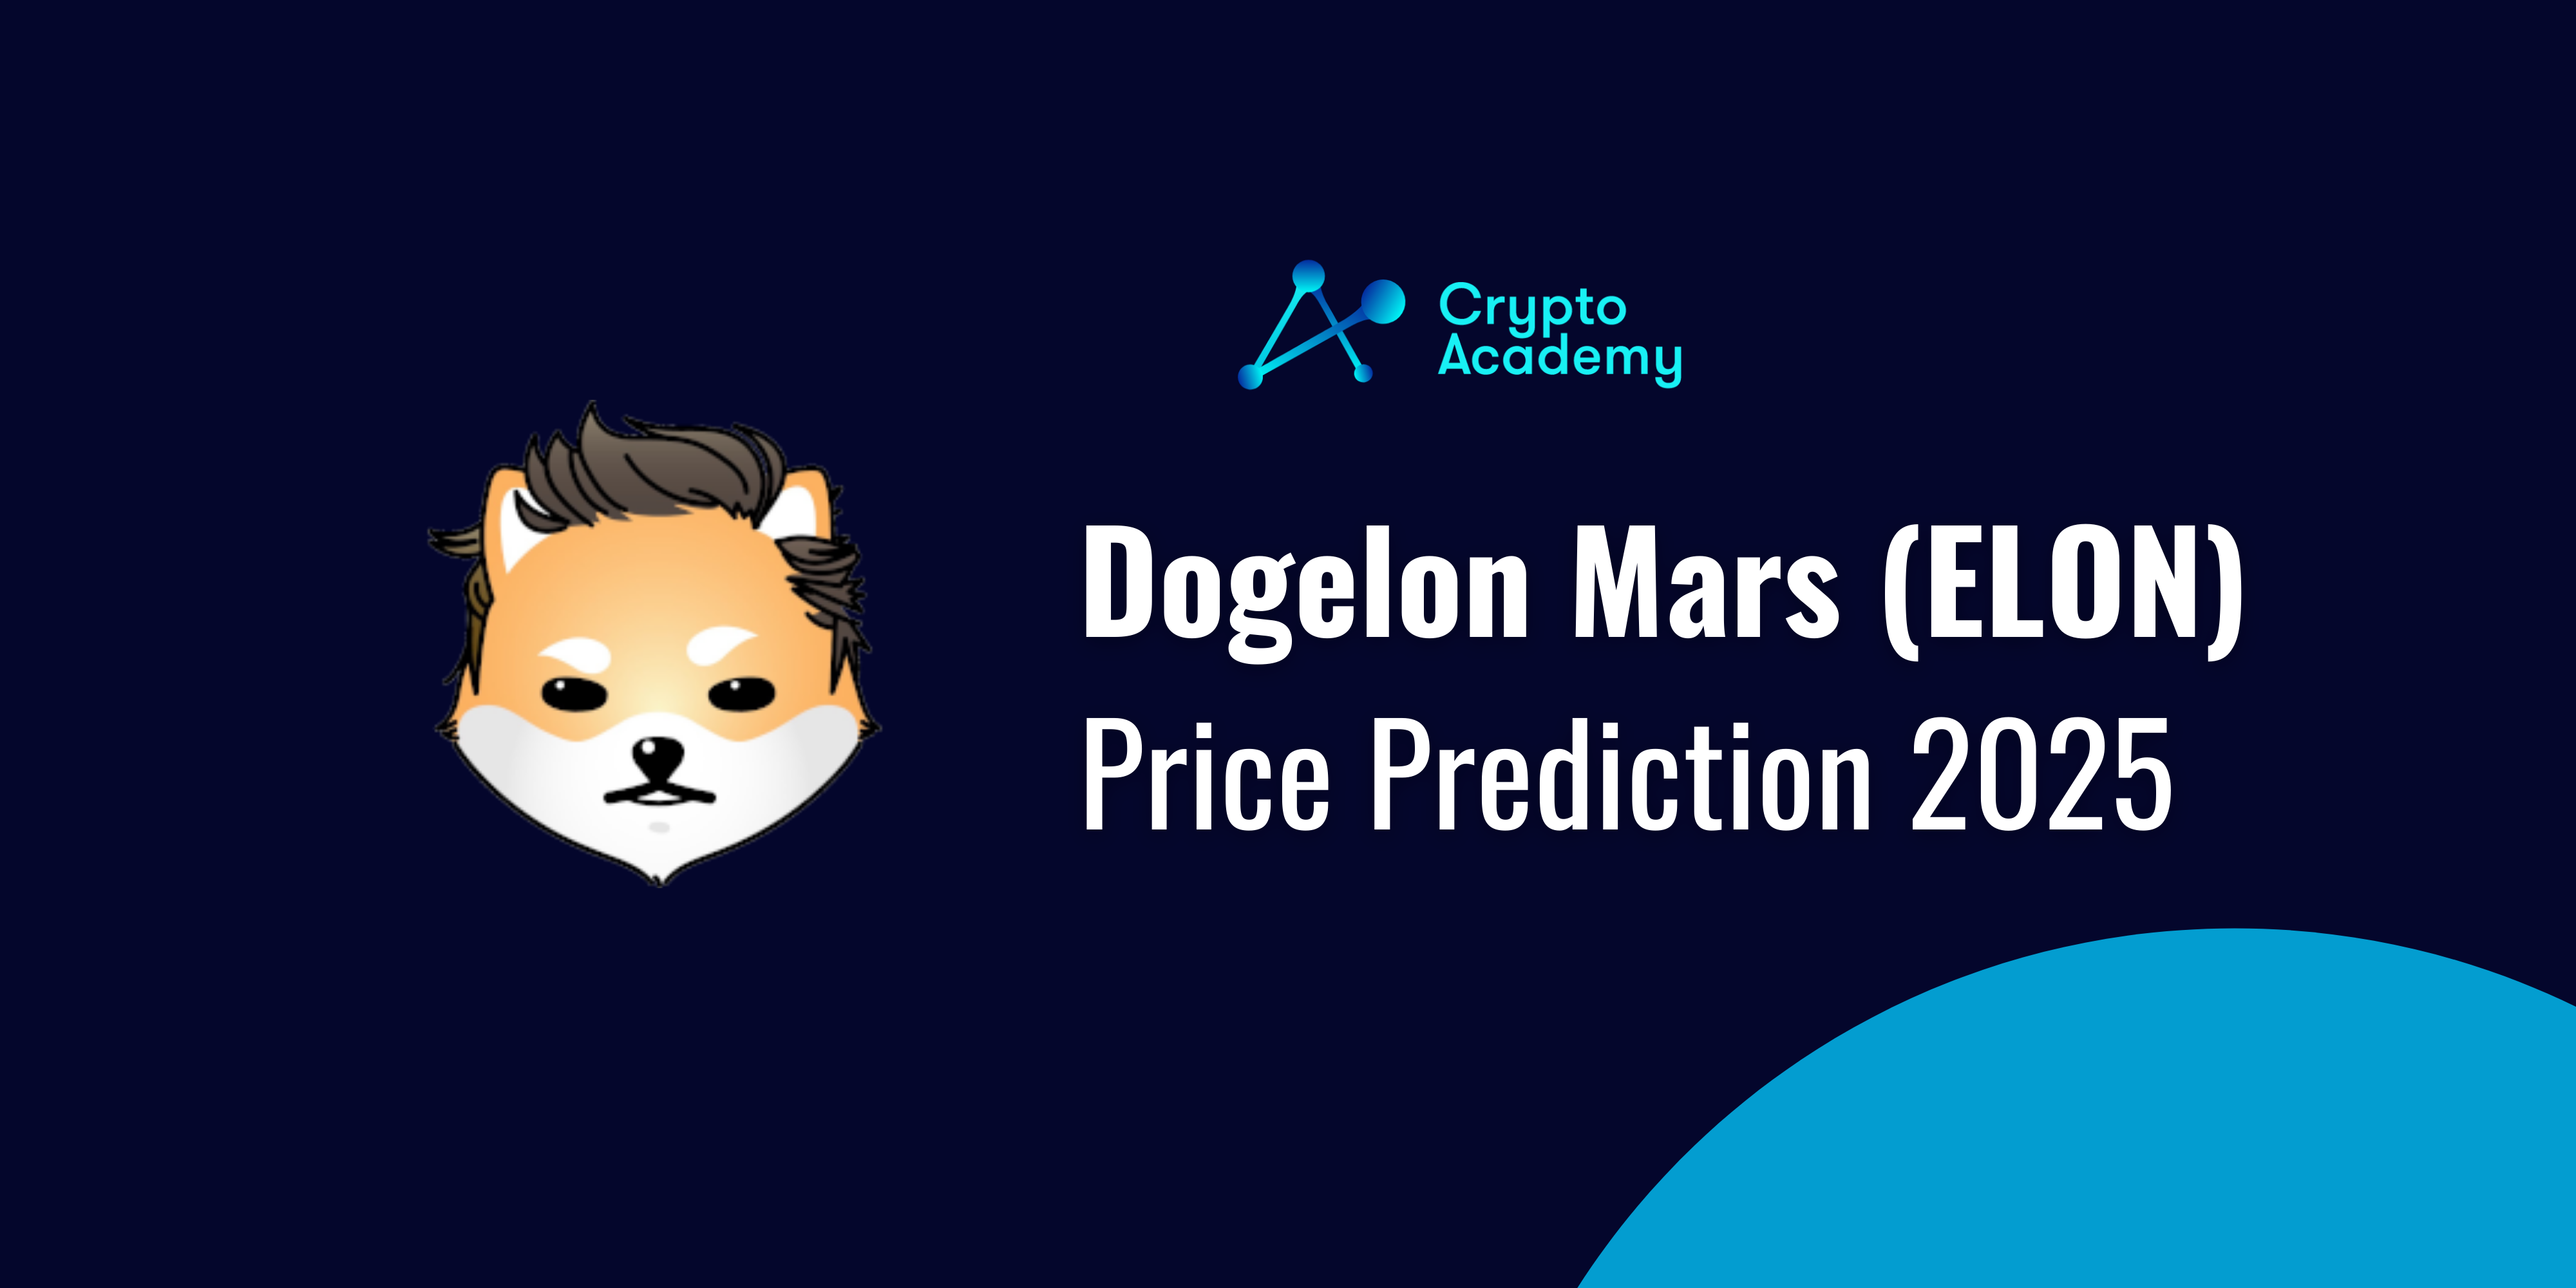 Dogelon Mars Price Prediction 2025 - How High Will ELON Go?